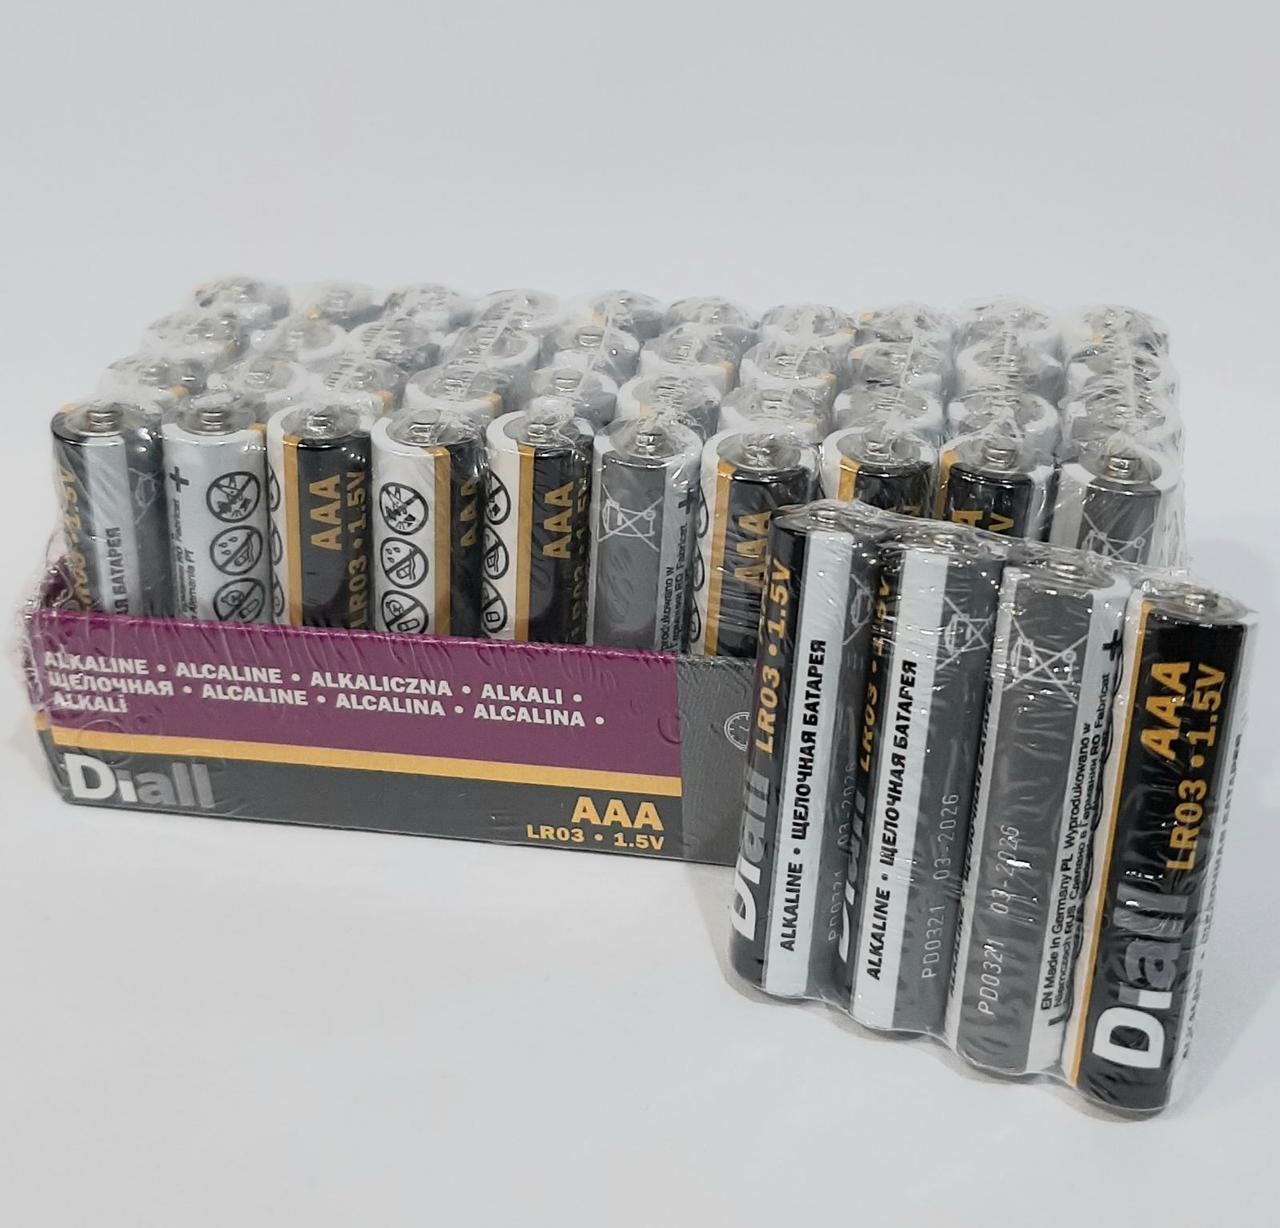 Батарейки Diall Alkaline LR03 ААA